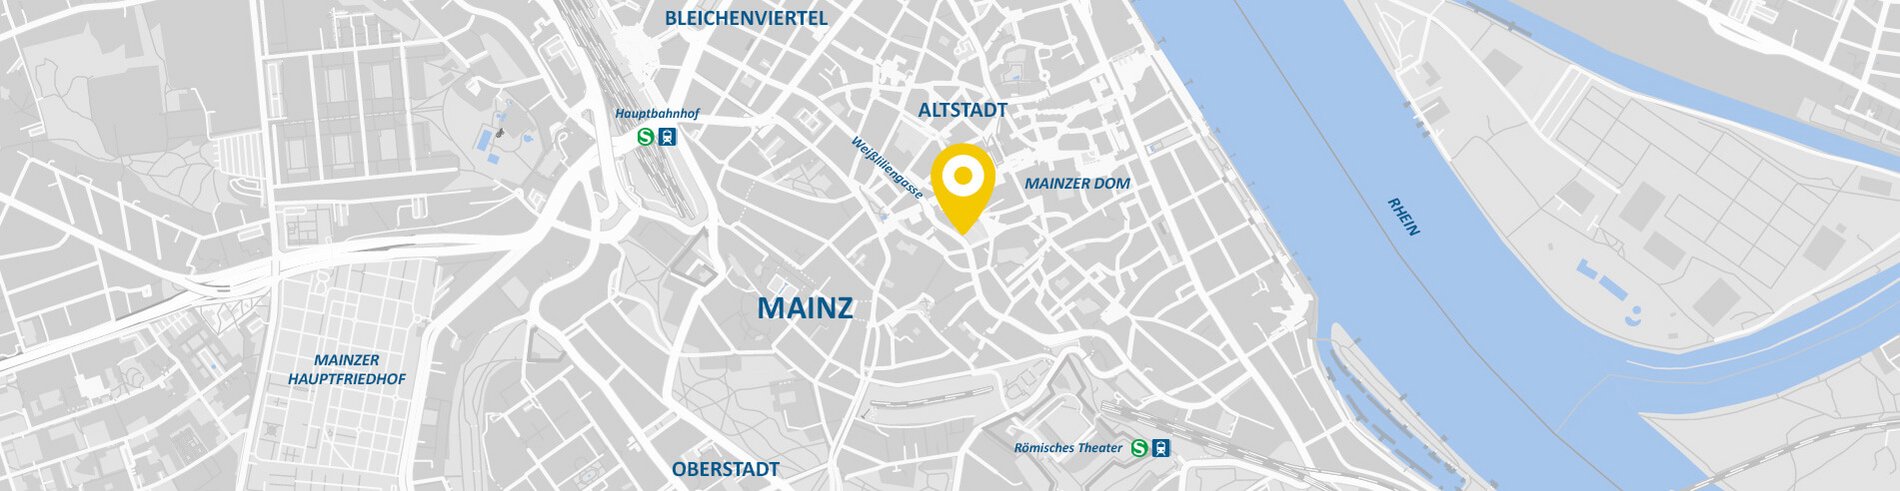 Zahnarzt Mainz Karte